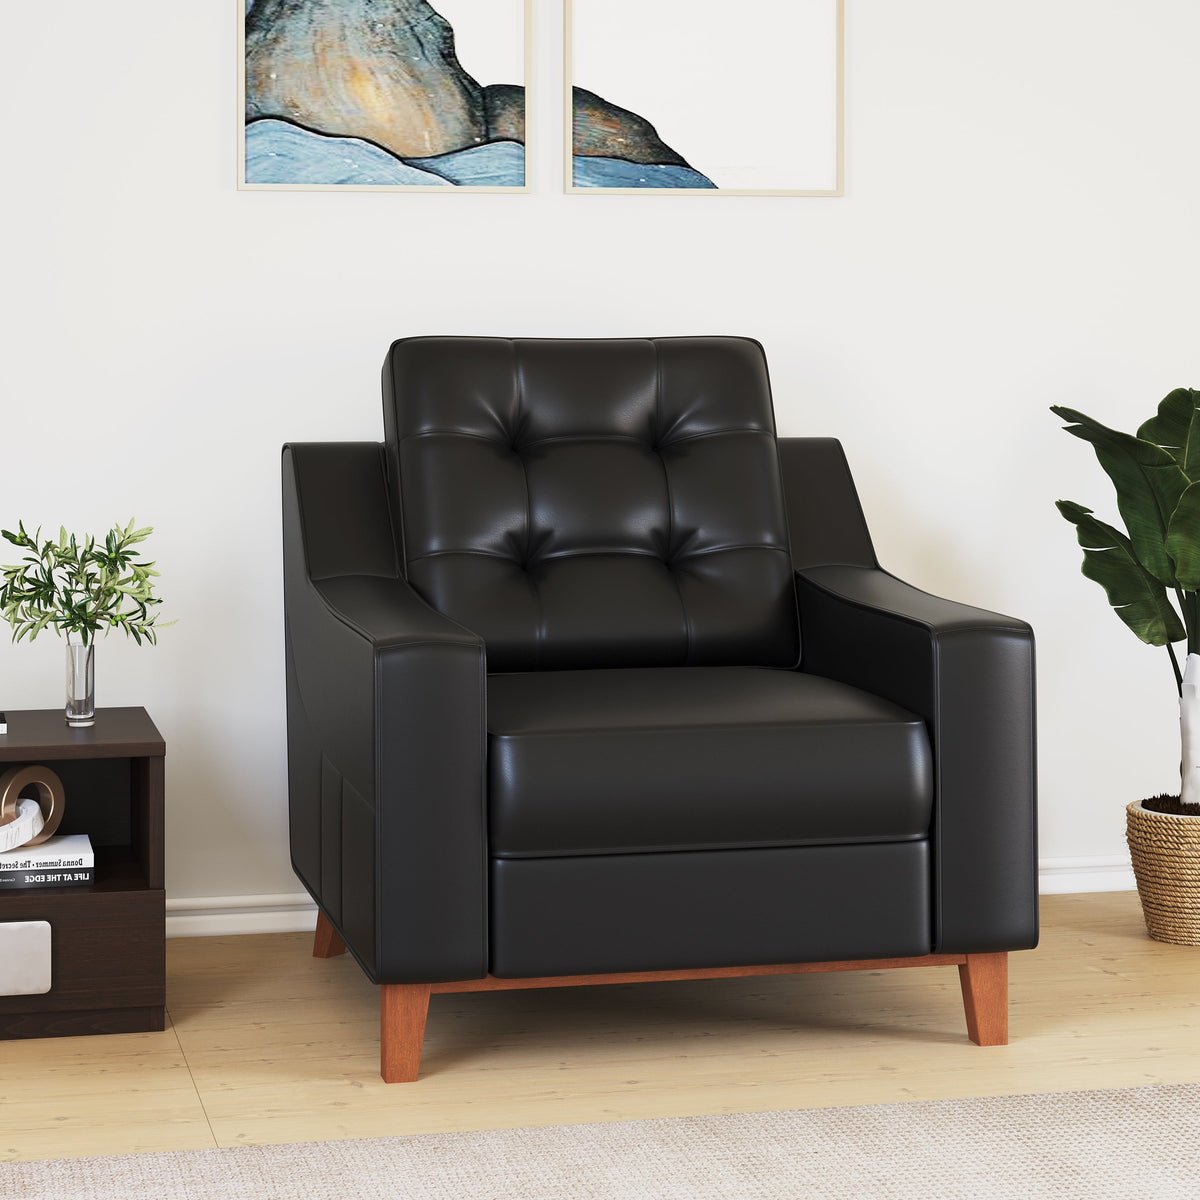 Buy Marissa 1 Seater Sofa (Black)Online- At Home by Nilkamal | Nilkamal ...